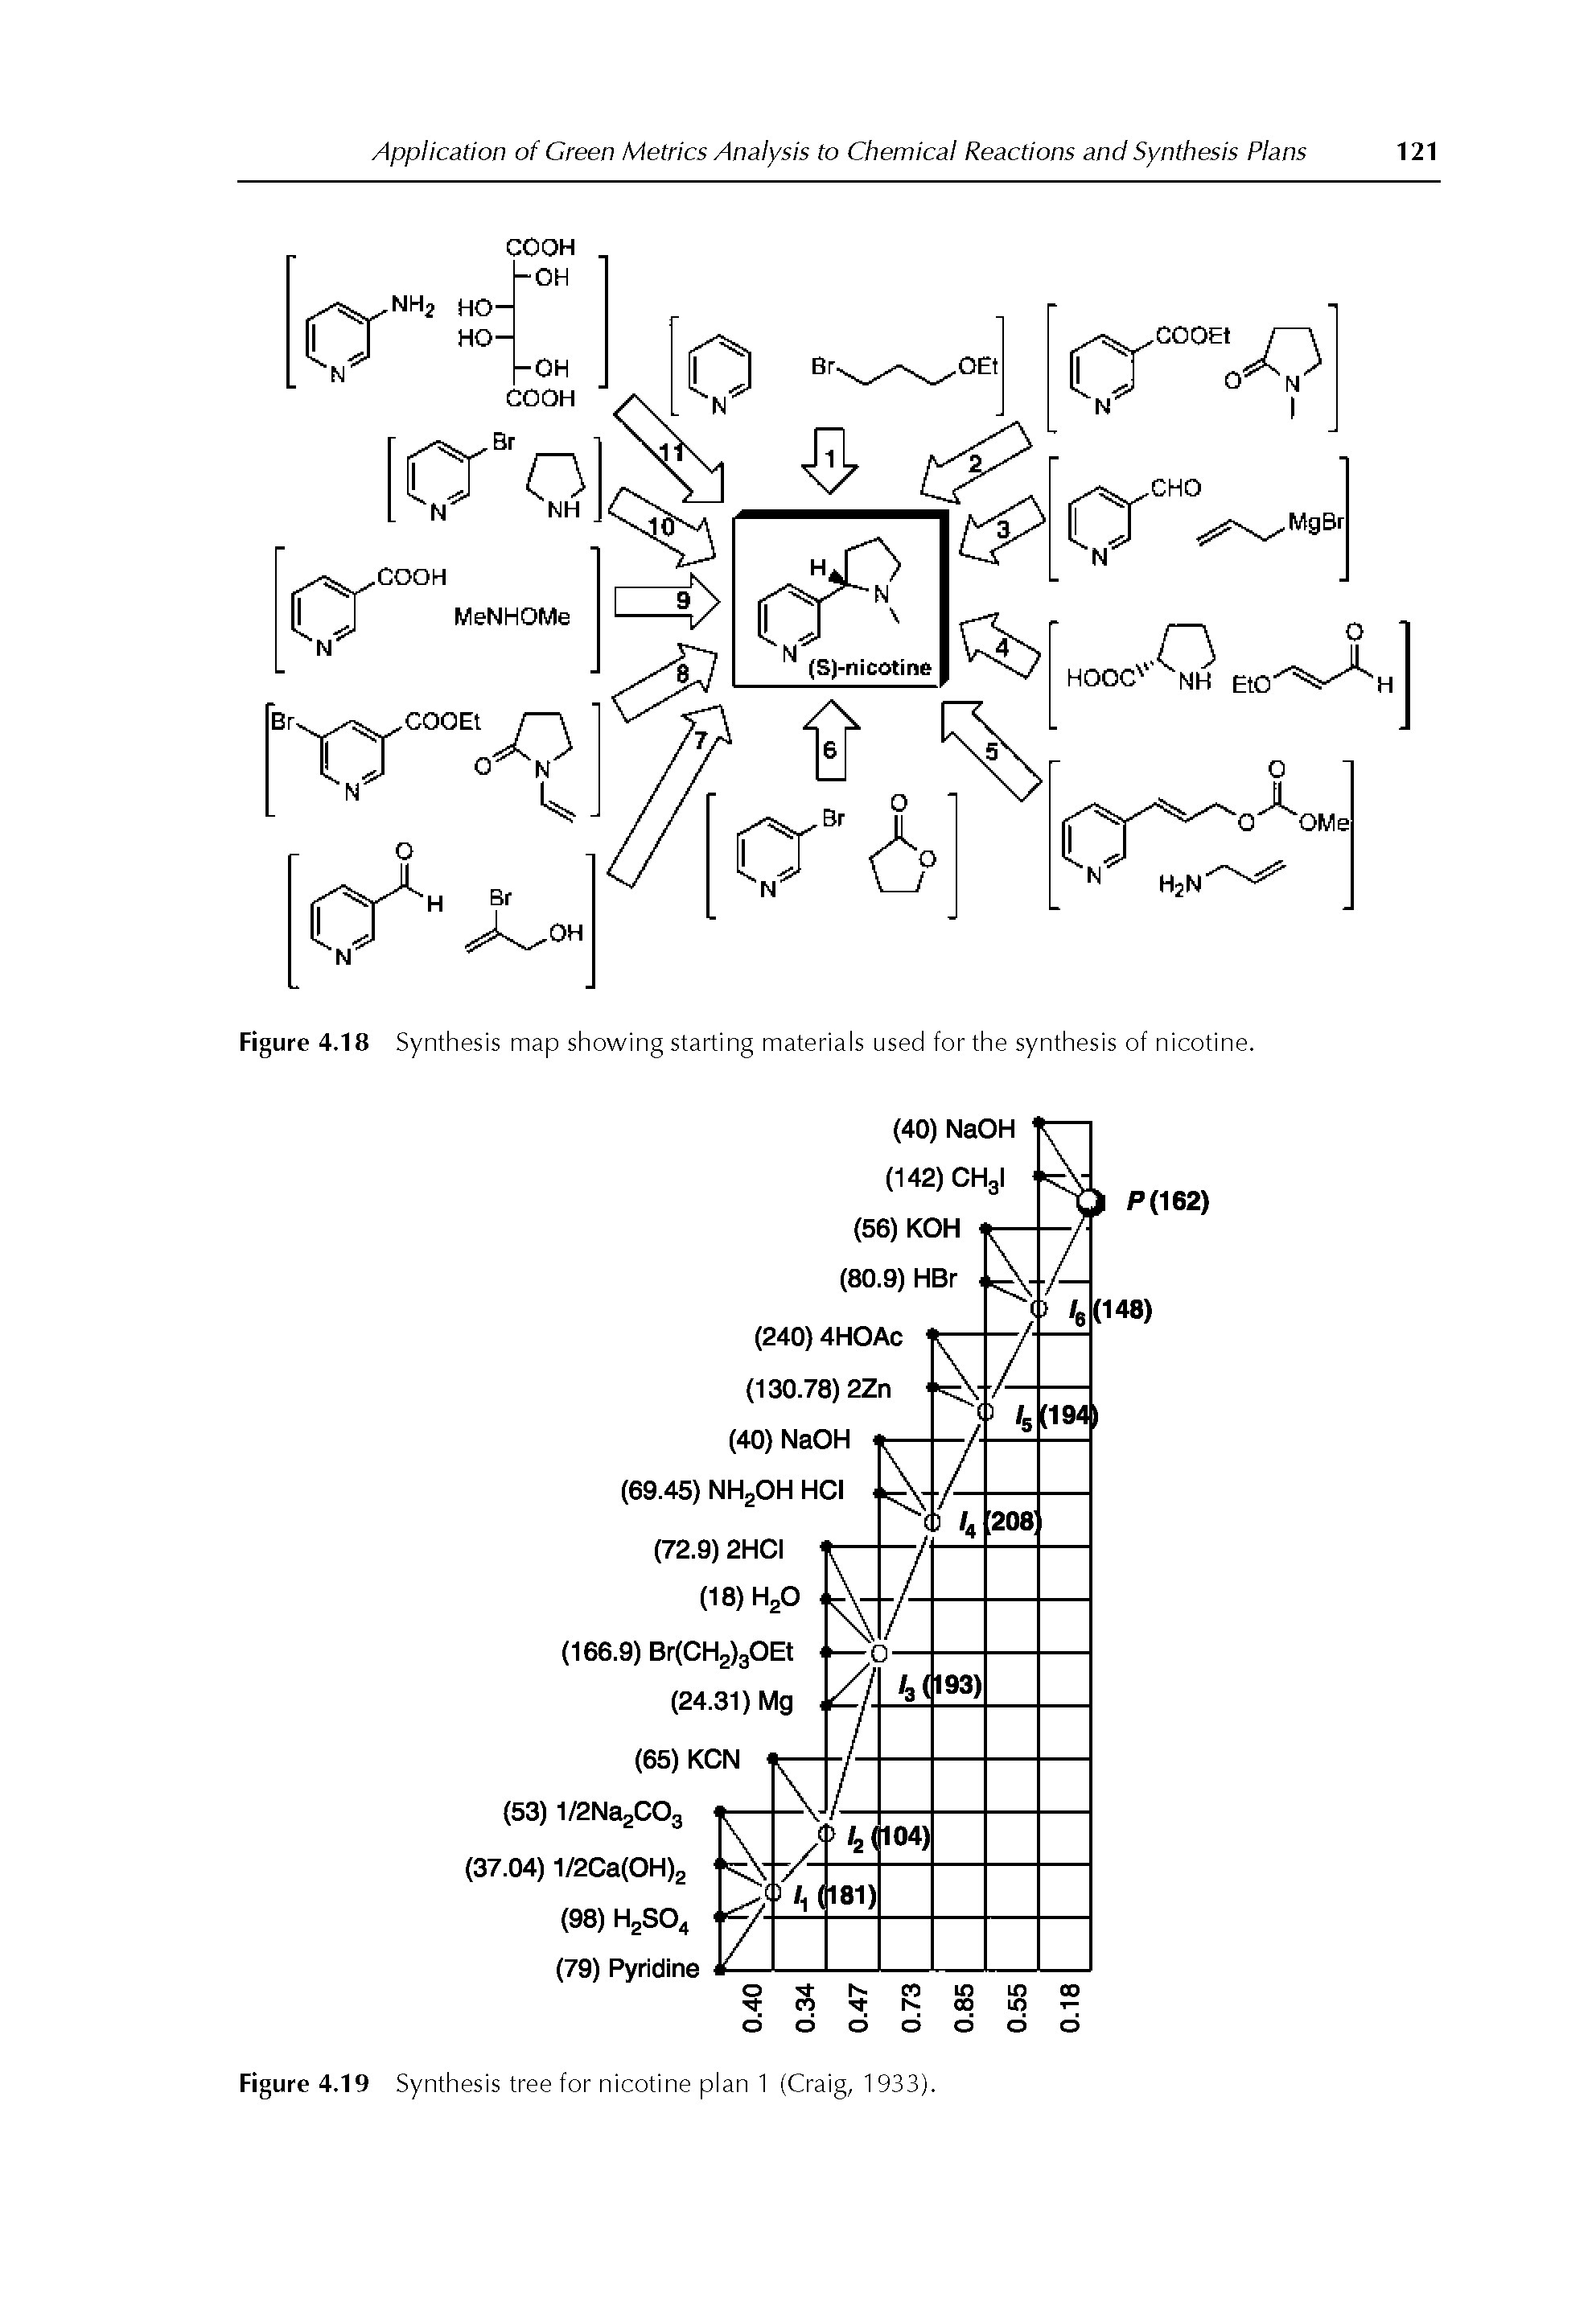 Figure 4.19 Synthesis tree for nicotine plan 1 (Craig, 1 933).